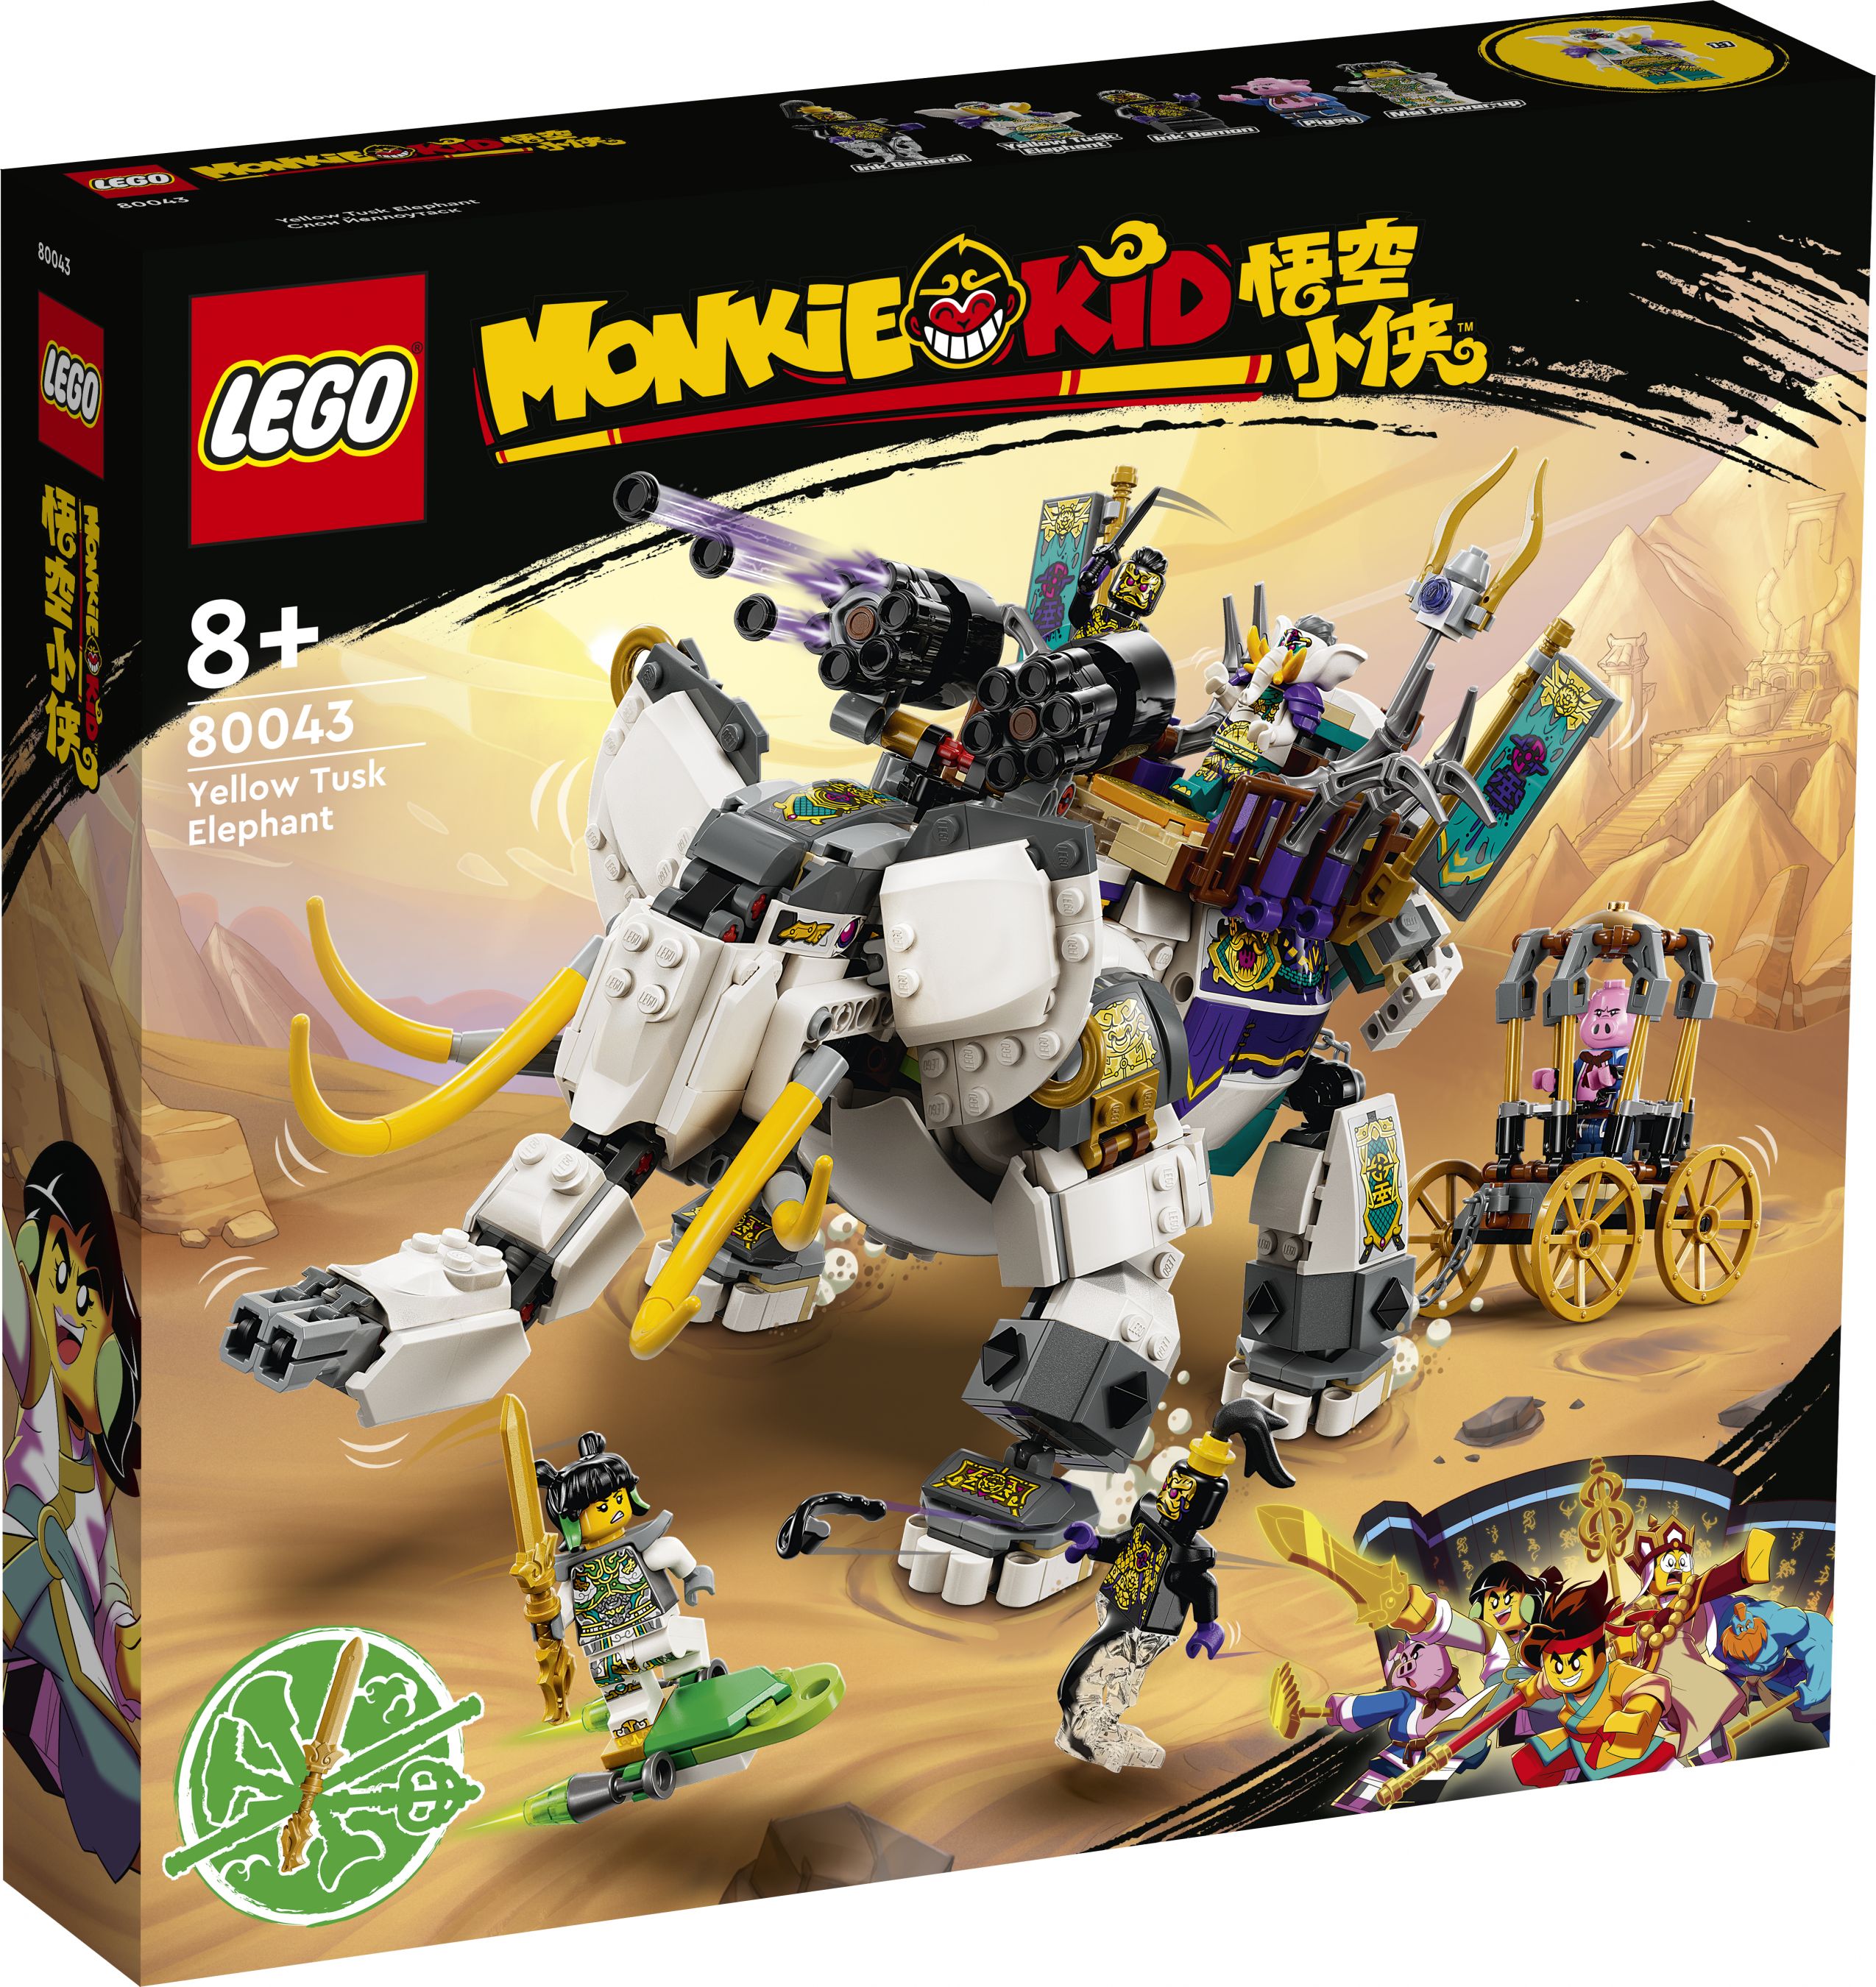 LEGO Monkie Kid 80043 Yellow Tusk Elephant LEGO_80043_Box1_v29.jpg